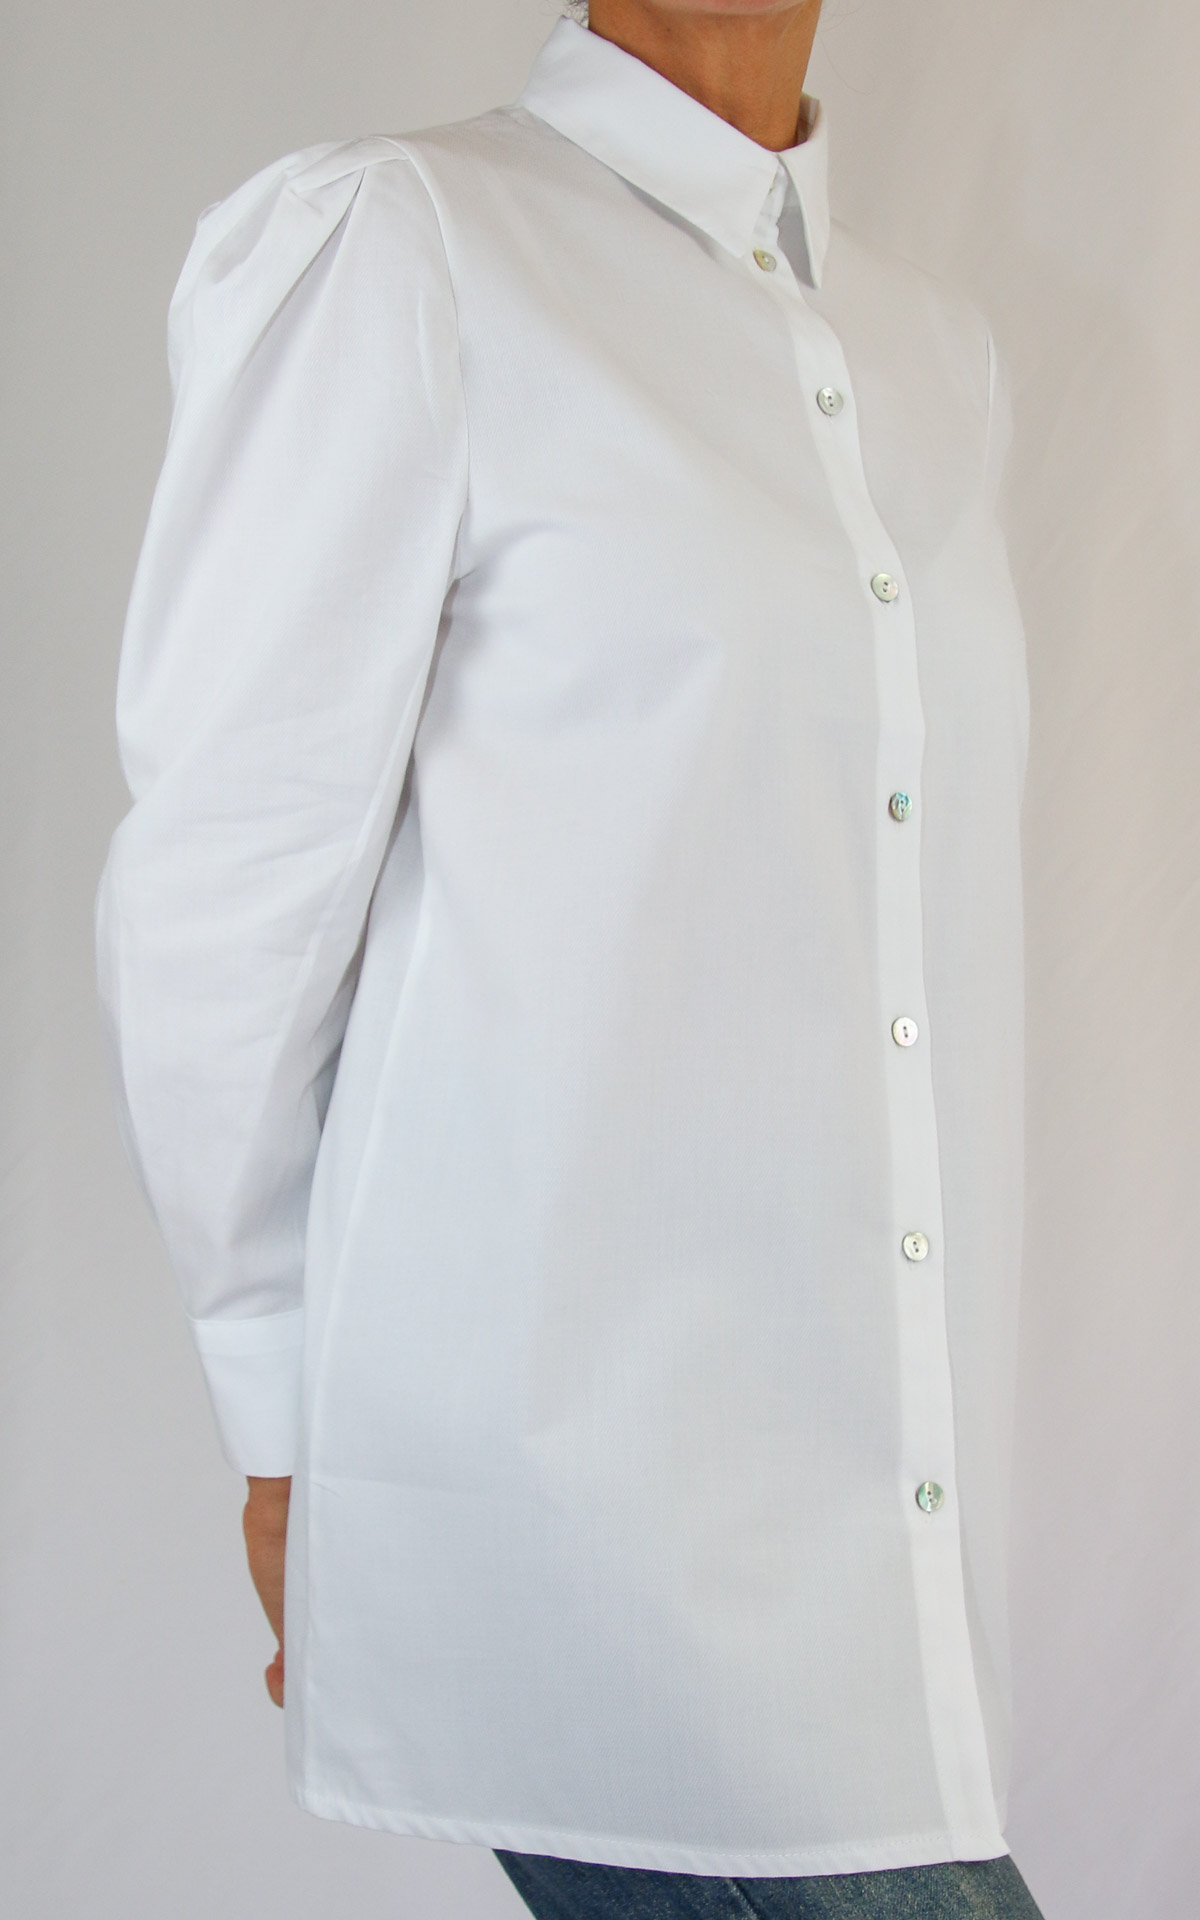 SusyMix - camicia manica a palloncino - bianca